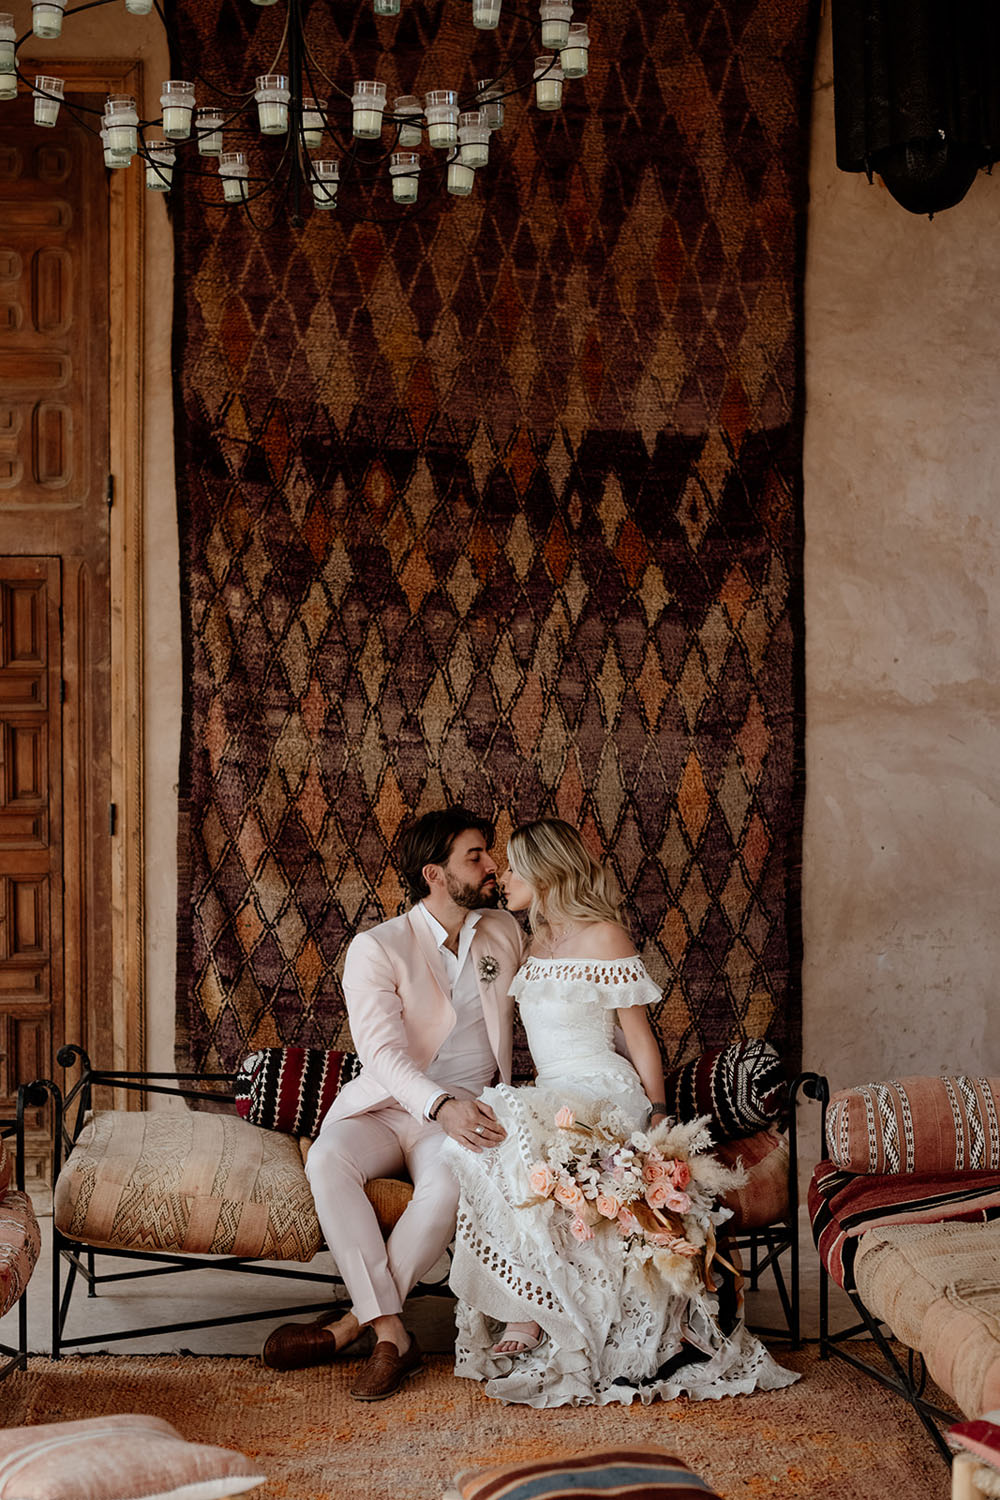 Morocco destination wedding inspiration at BELDI Country Club in Marrakech